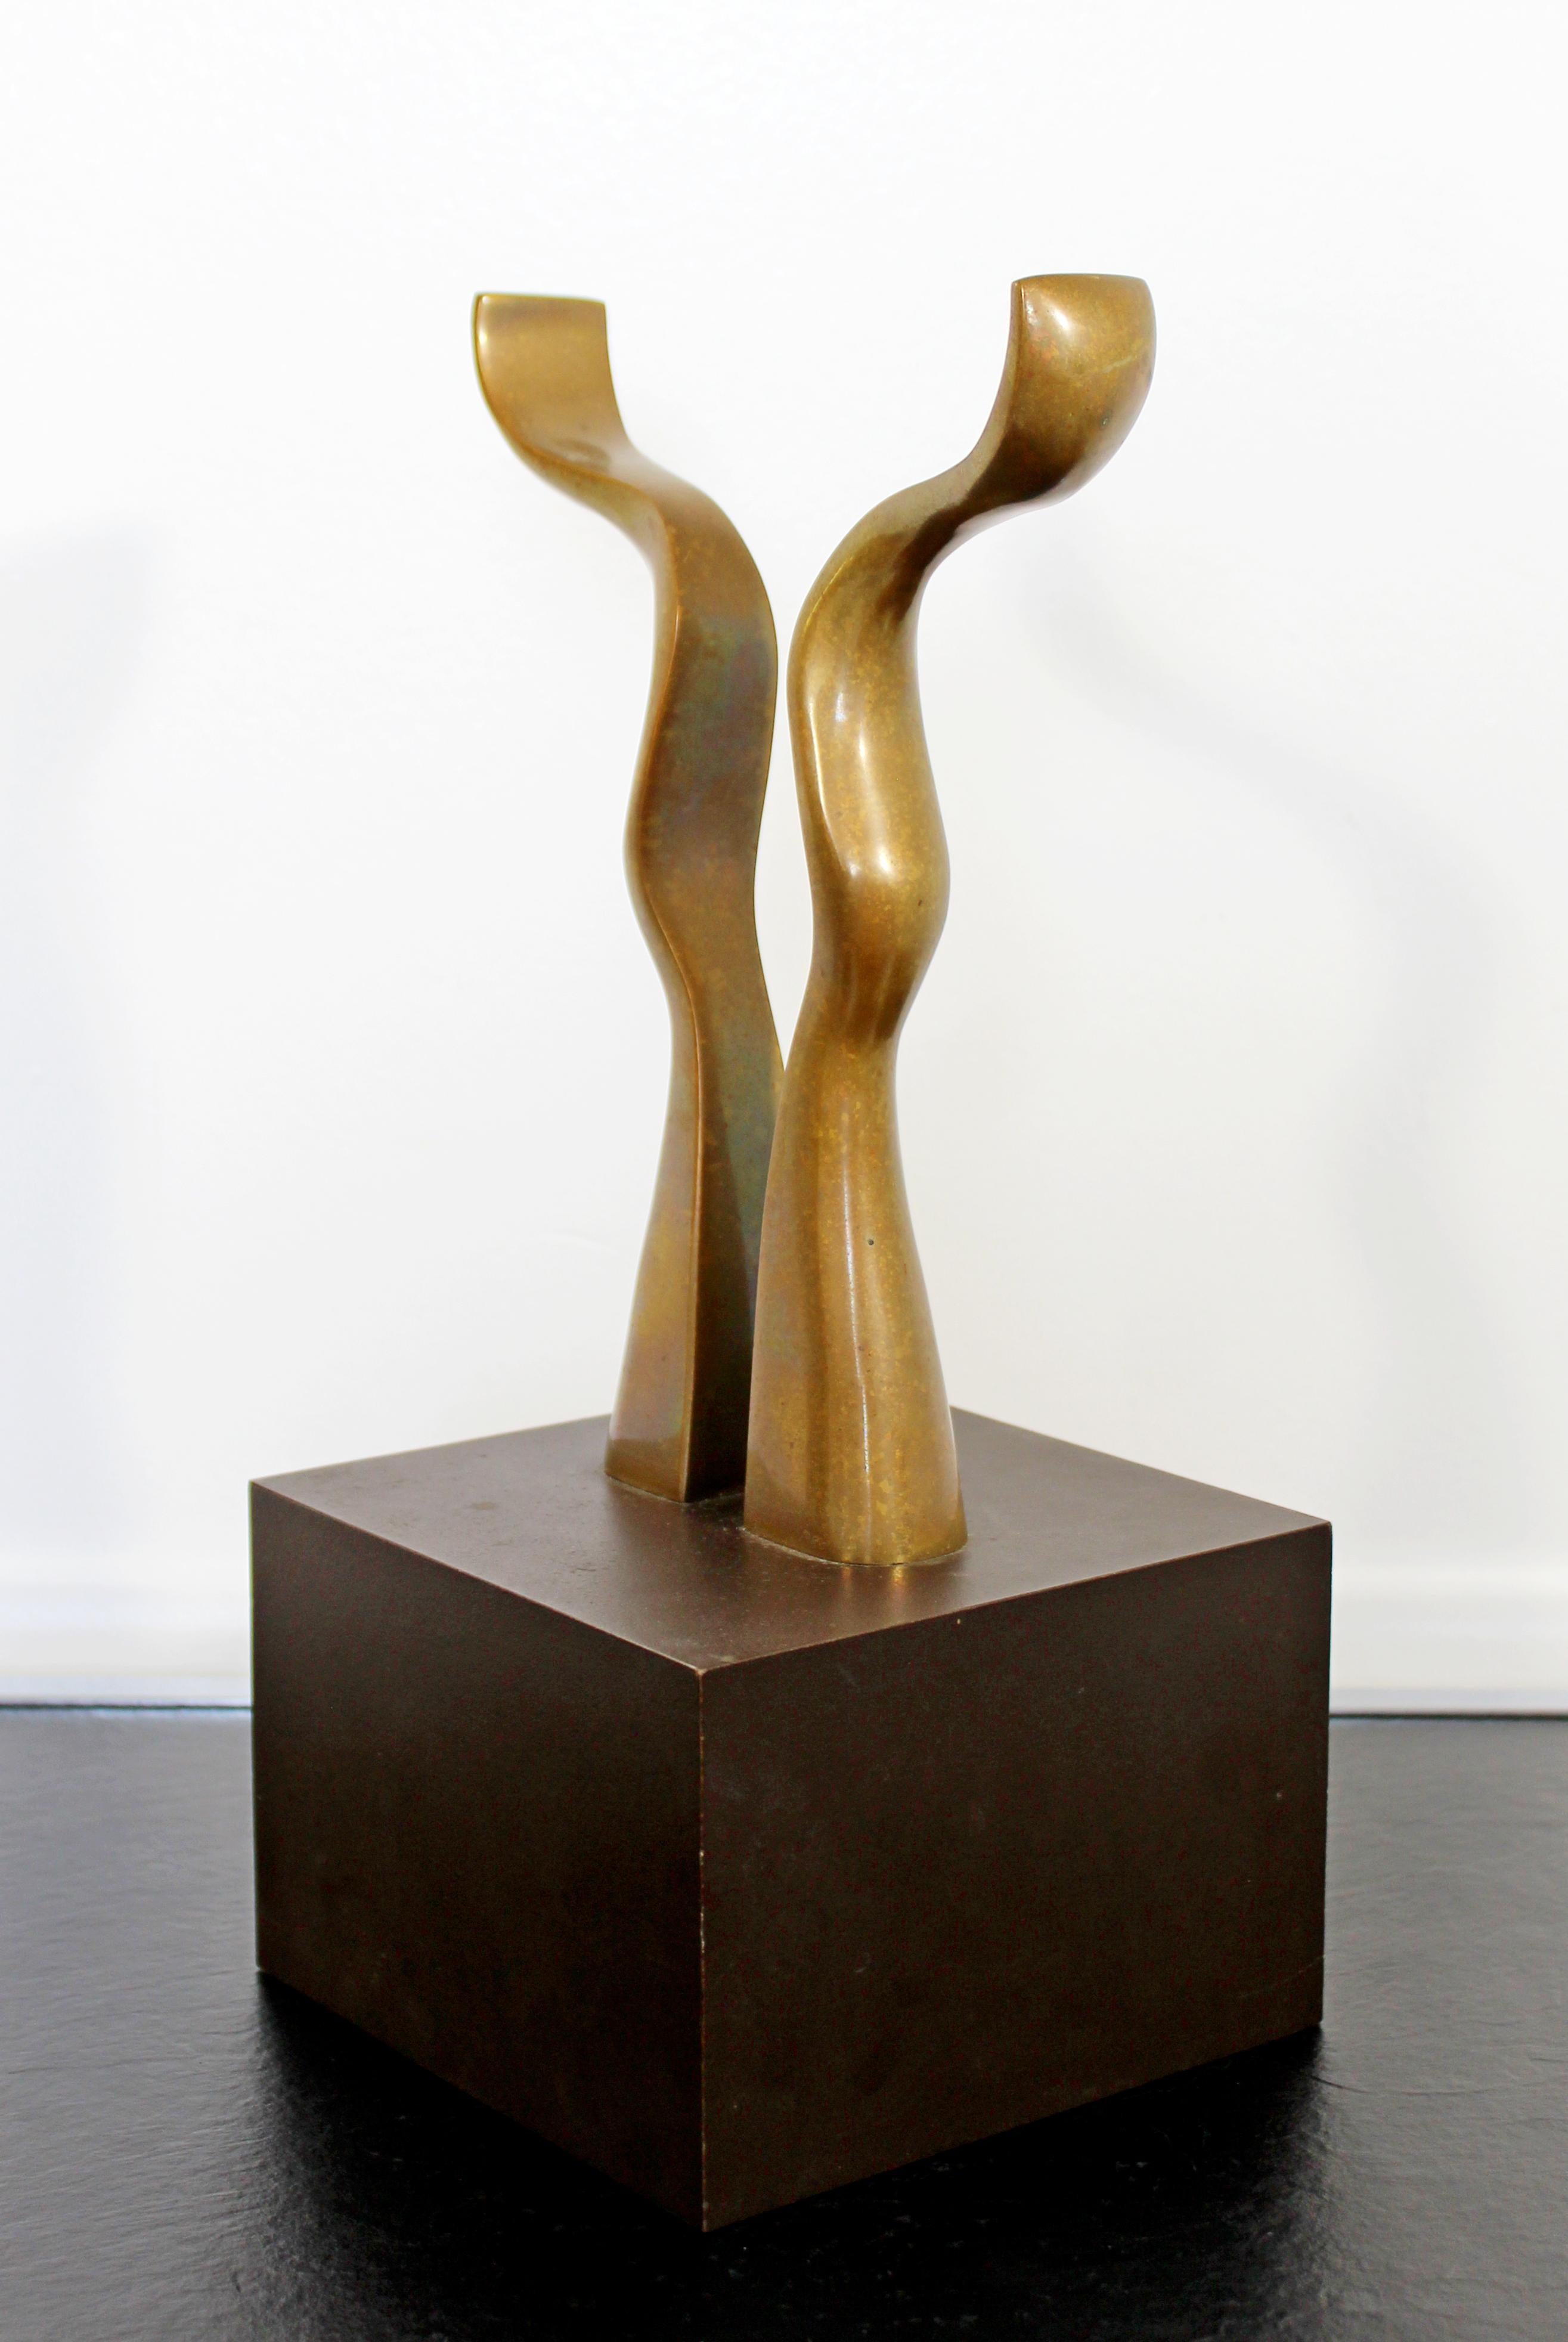 Late 20th Century Contemporary Modern Bronze Table Sculpture Signed Joseph Burlini 4/5, 1980